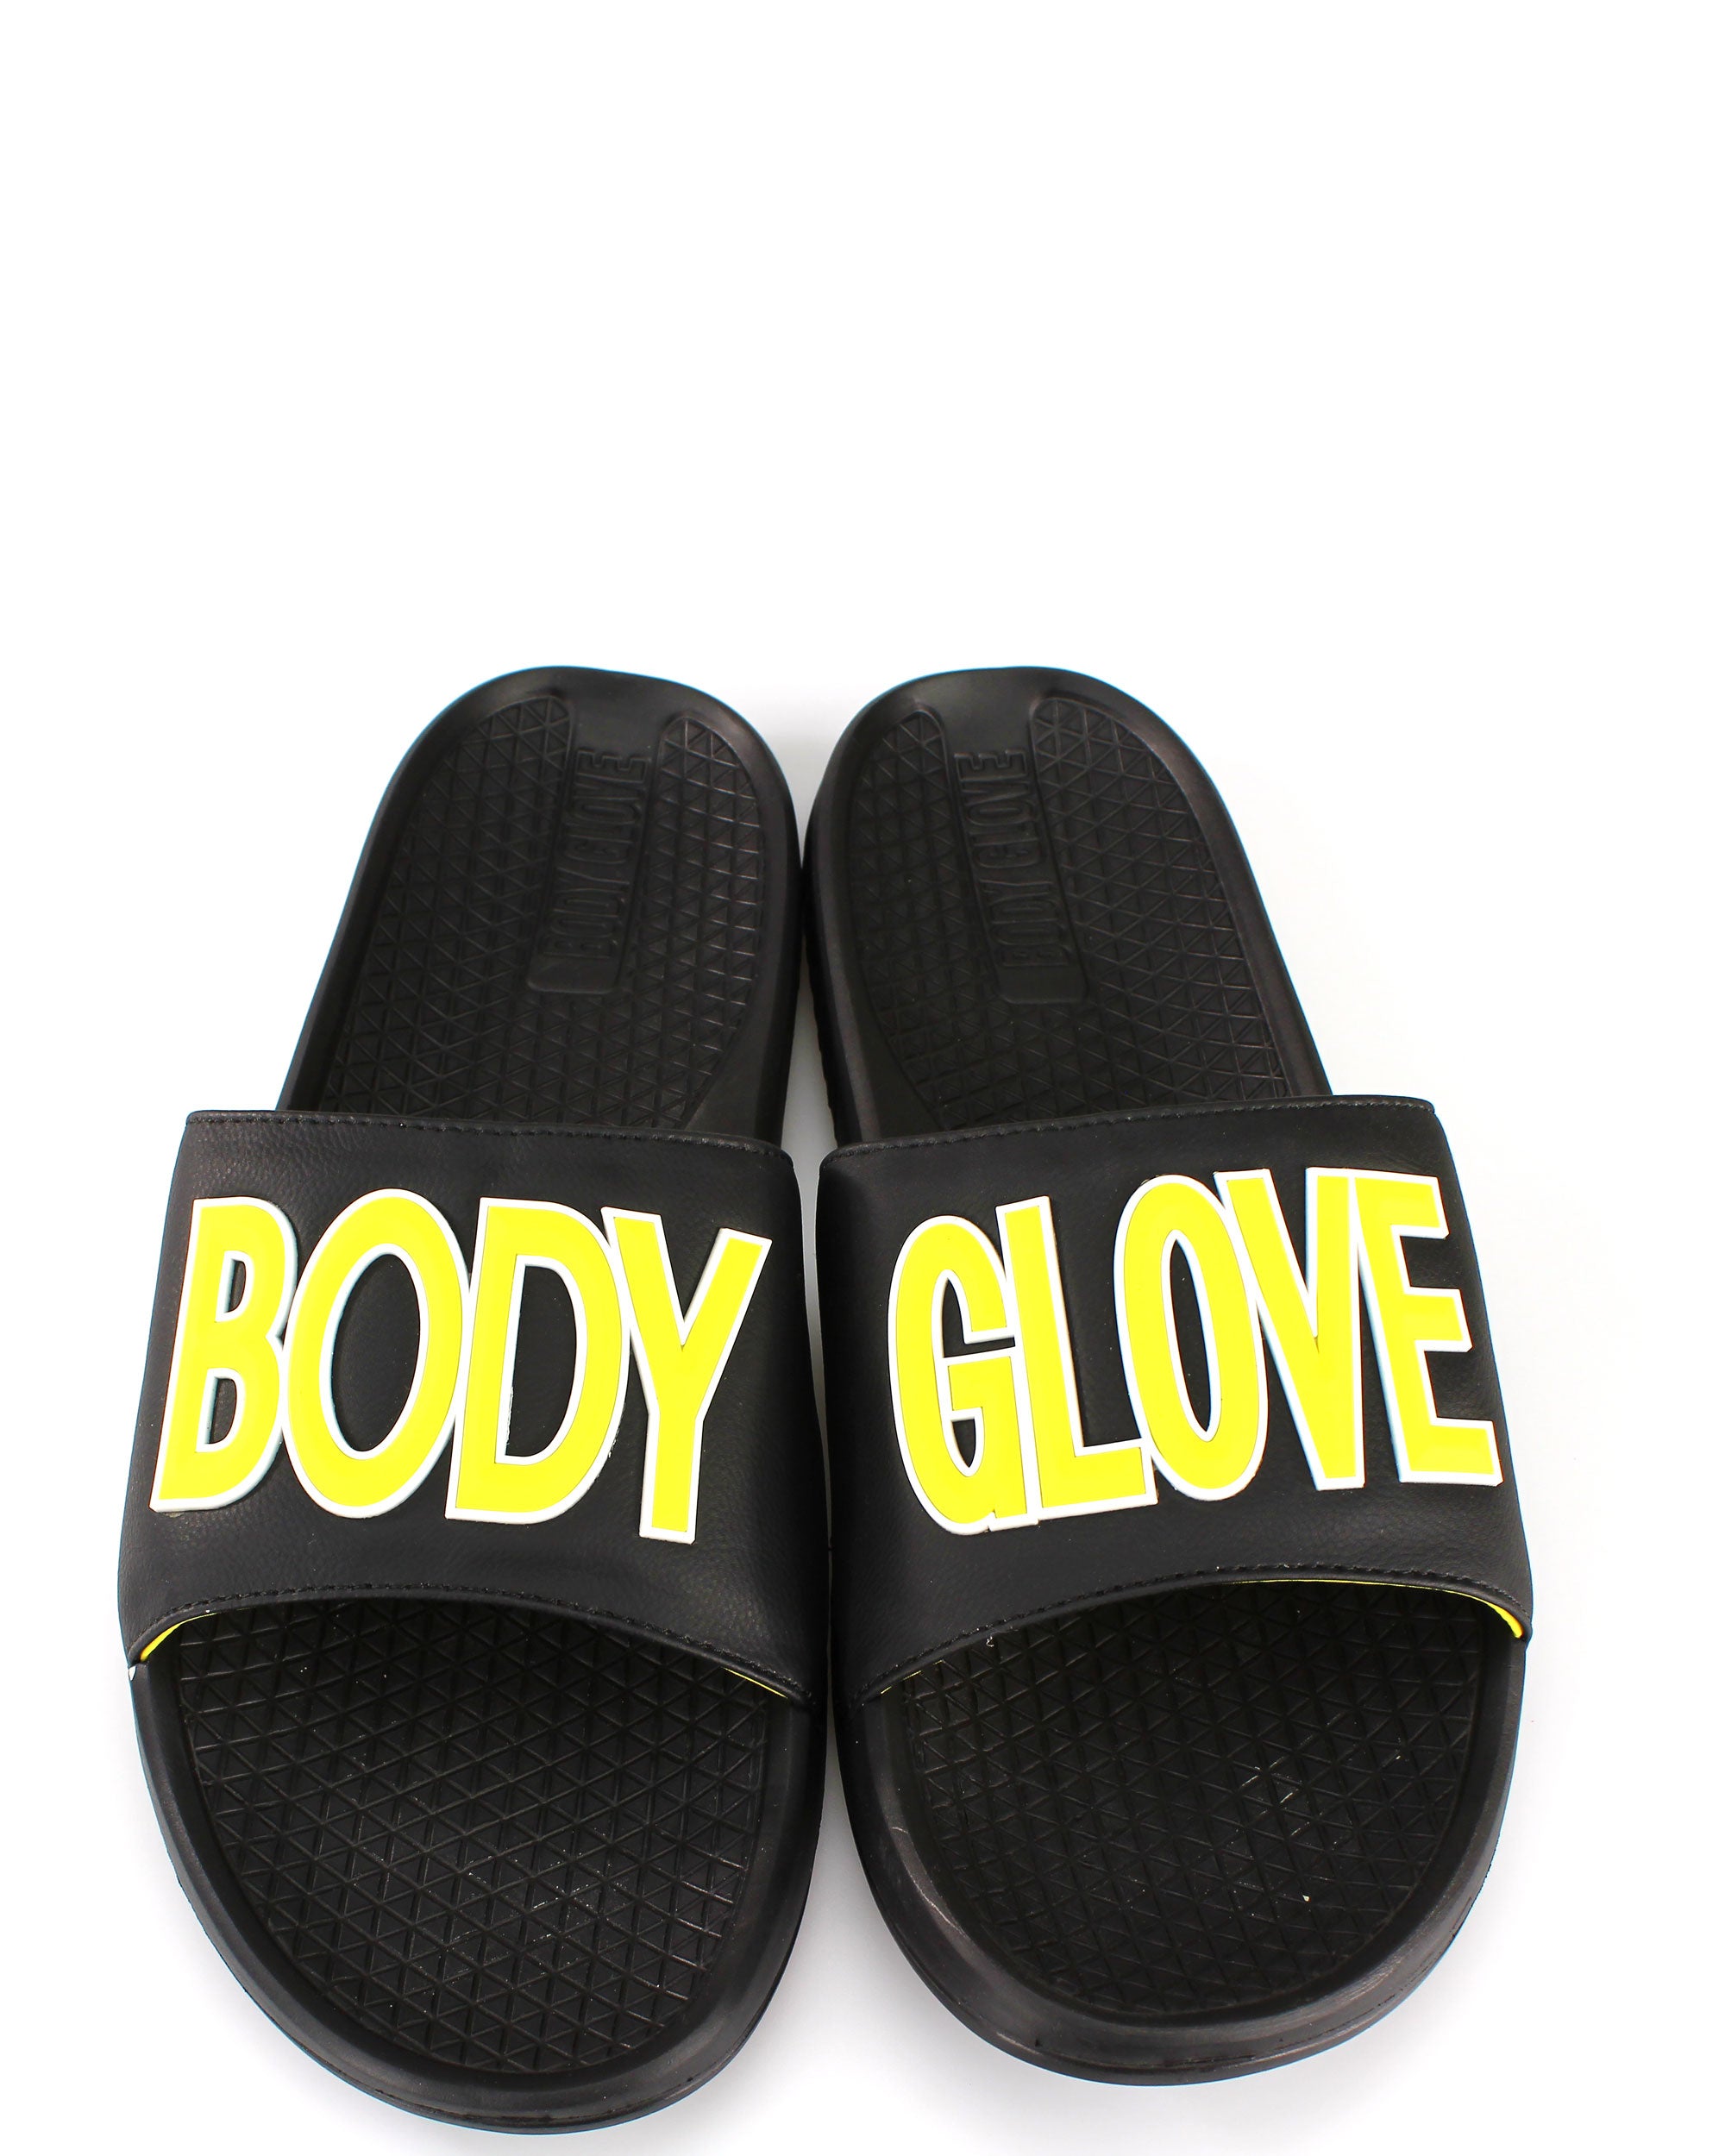 body glove slip on shoes